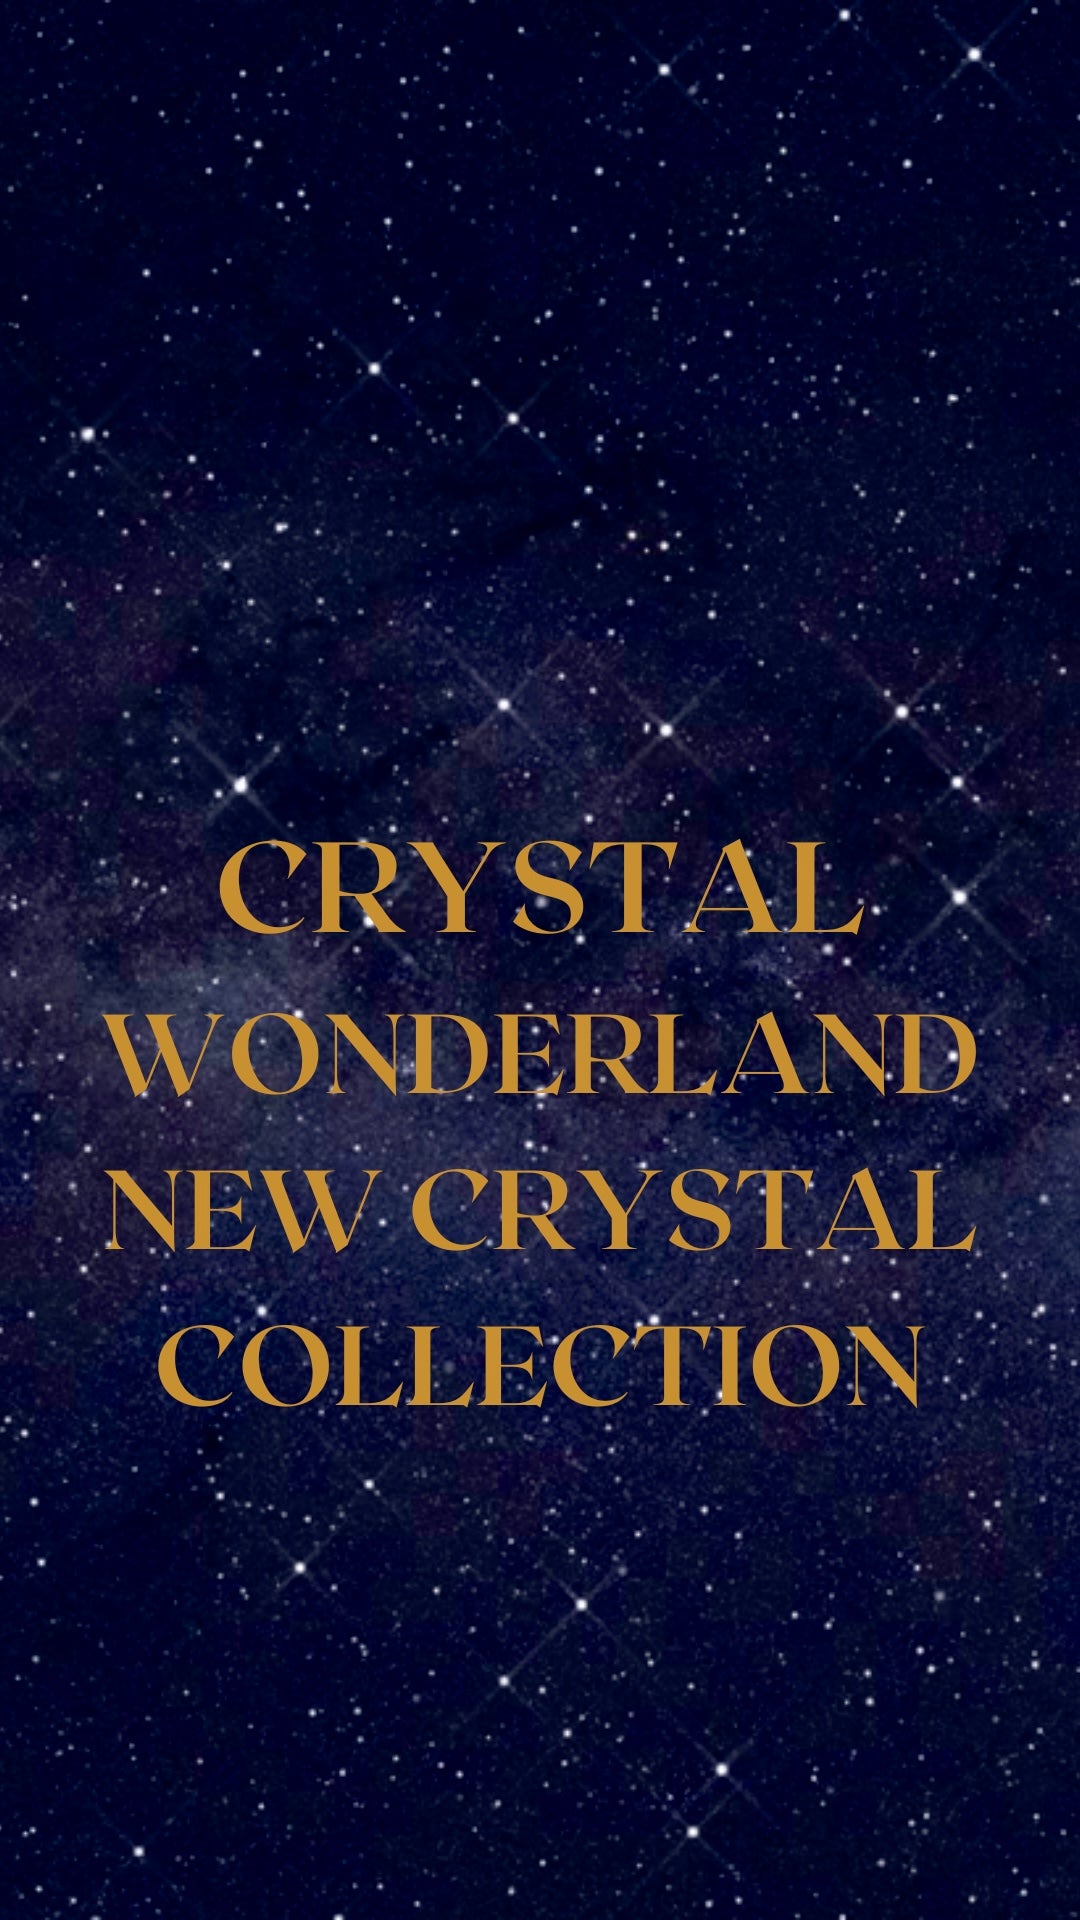 Crystal Wonderland Zodiac Crystal Set Capricorn